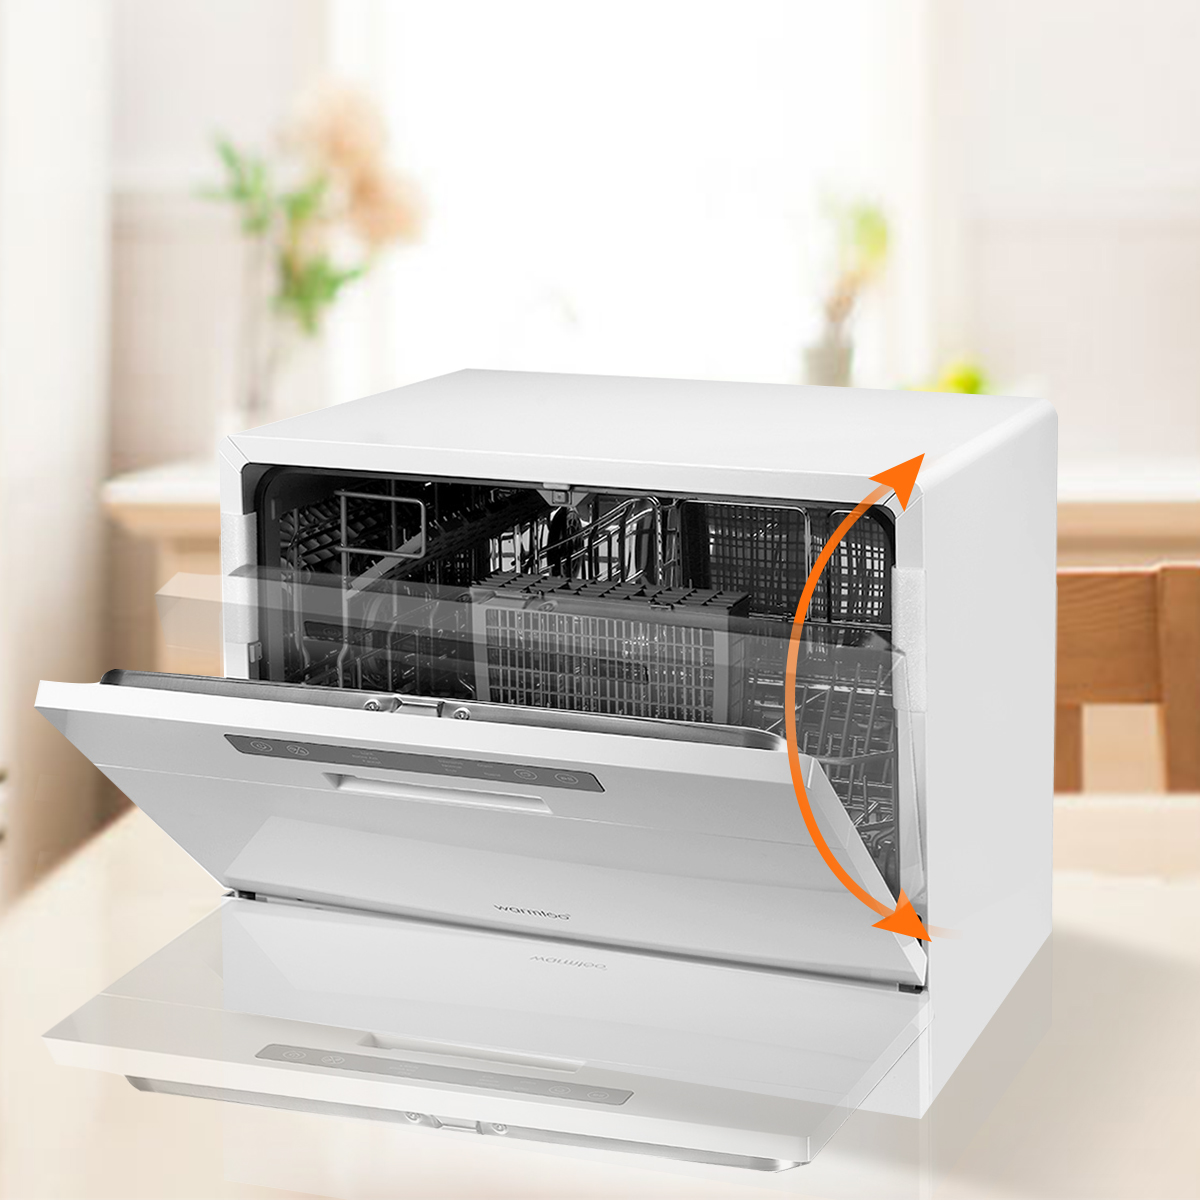 Warmto-6-Piece-Countertop-Dishwasher-Counter-Top-Dishwasher-Machine-Delay-Start-LED-Display-5-Washin-1931541-17